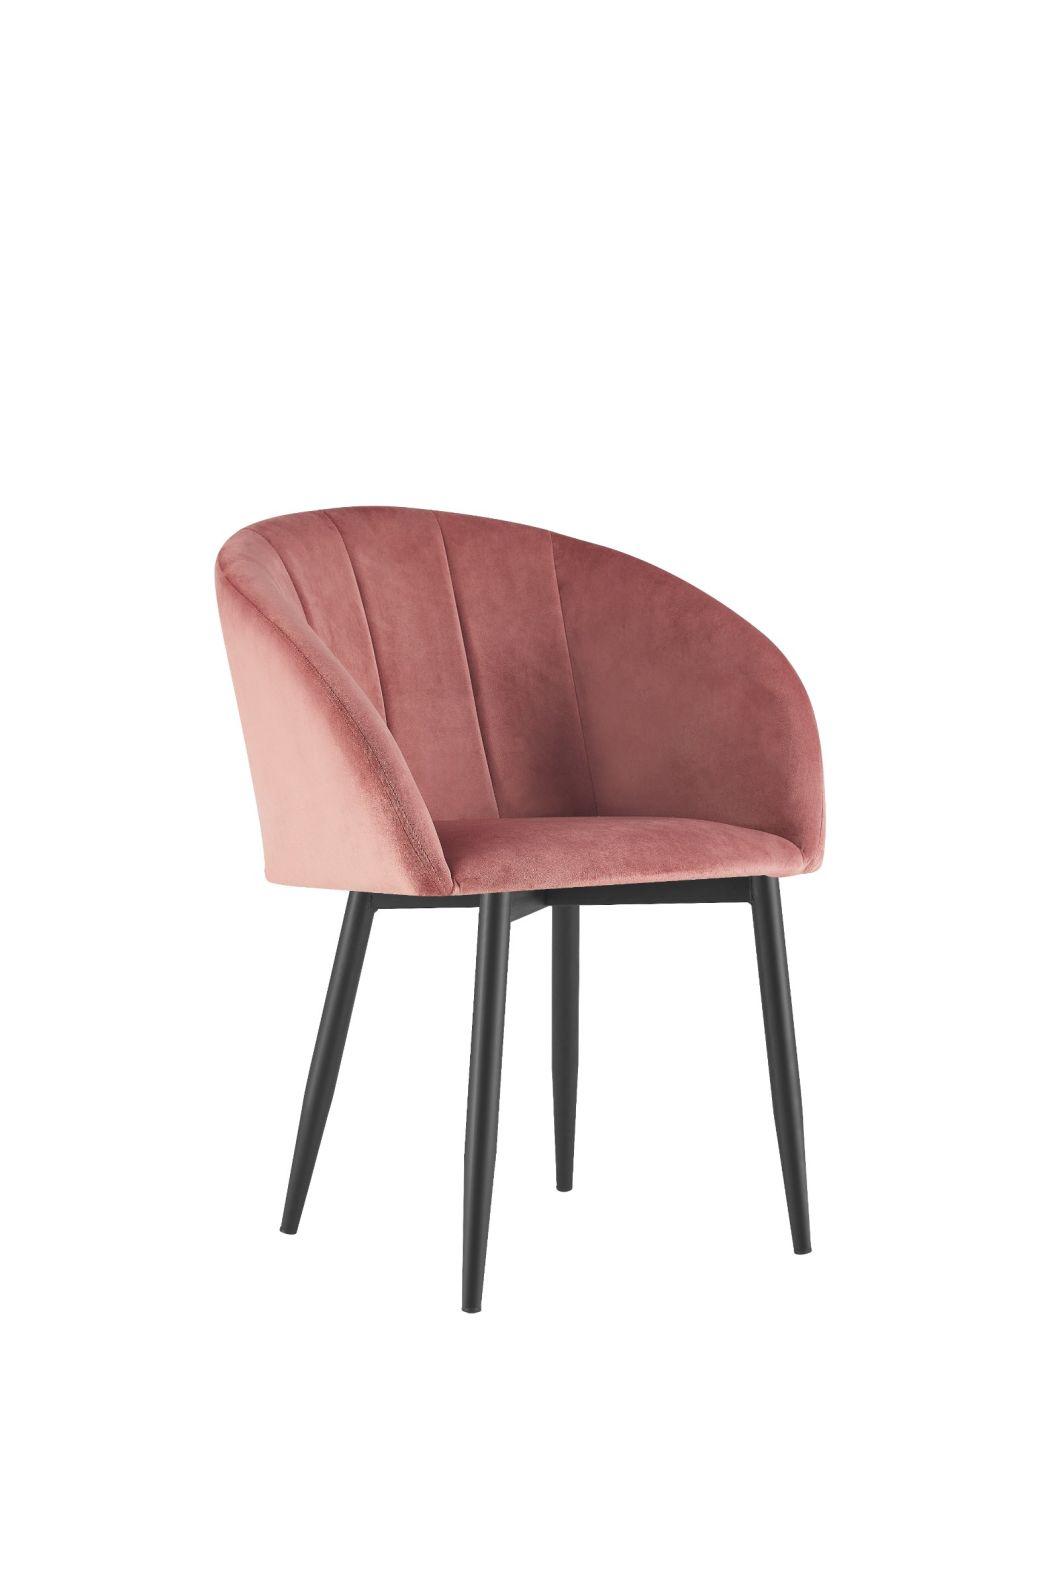 2021 New Restaurant Modern Fabric Dining Room Banquet Velvet Chairs